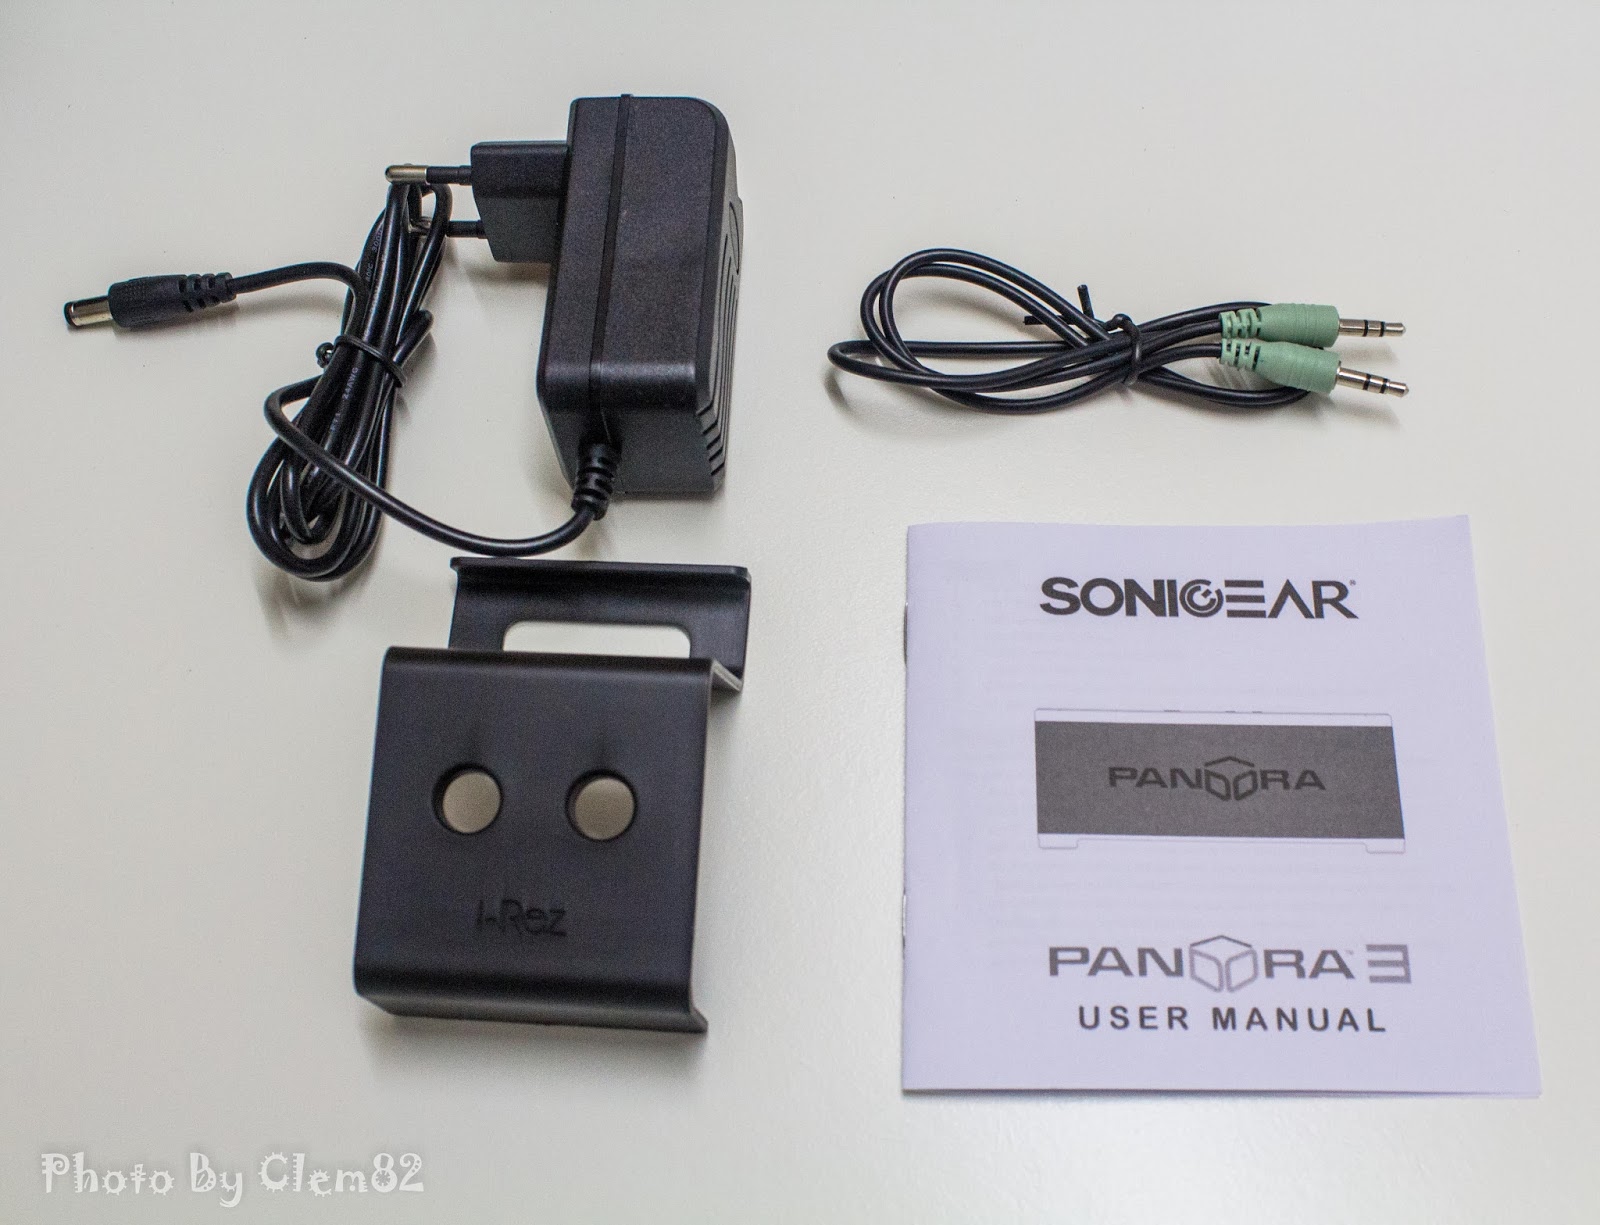 Opening Pandora's Box: SonicGear Pandora Wireless Bluetooth Media Player Series 168